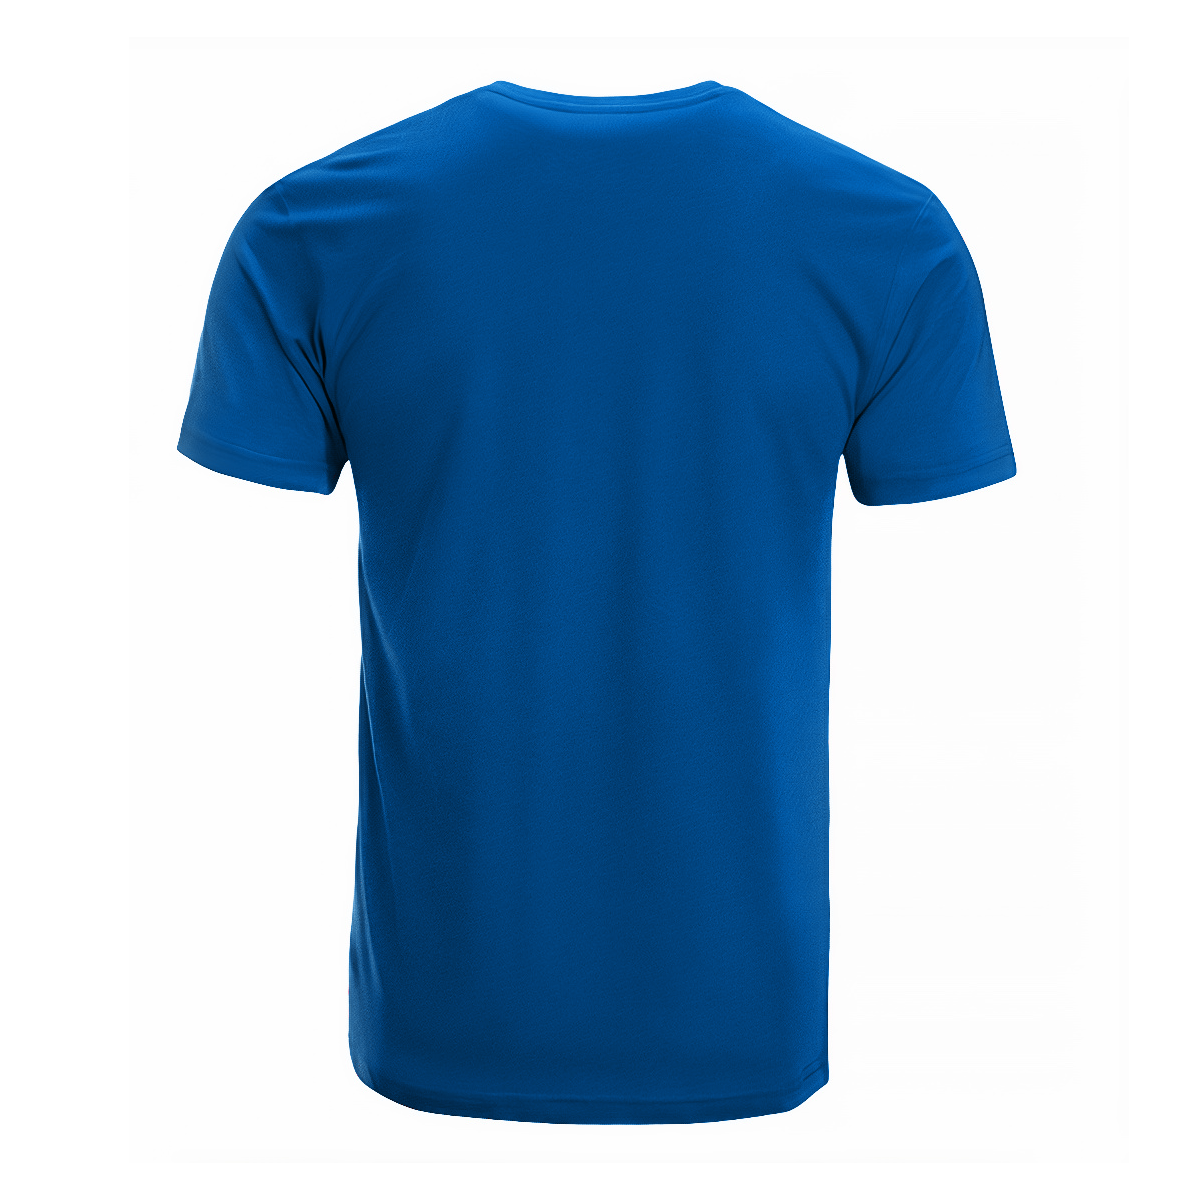 Broun Tartan Crest T-shirt - I'm not yelling style